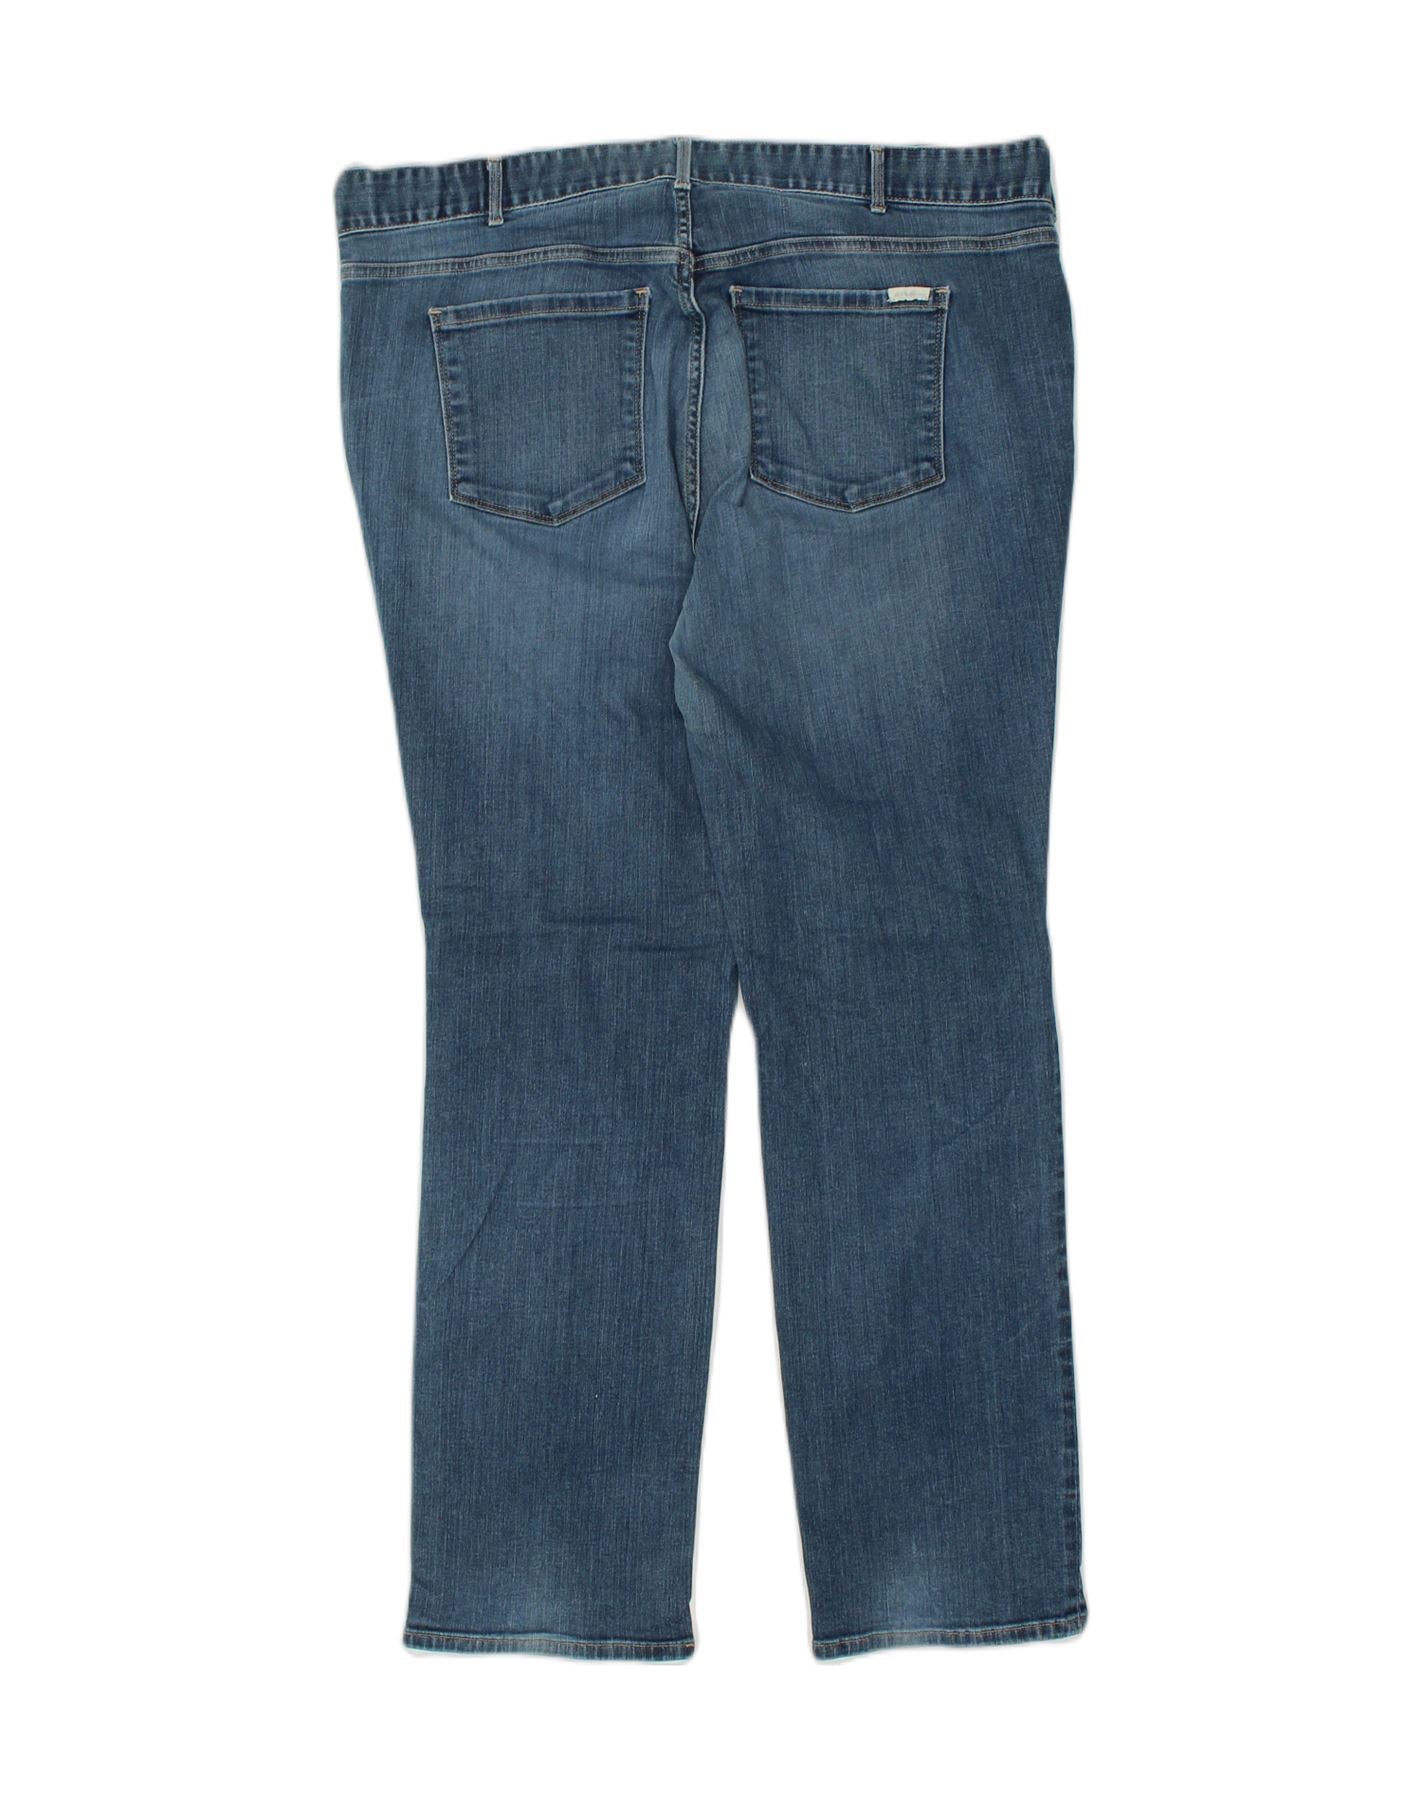 Blue Curvy Jegging Denim Pants Online Shopping